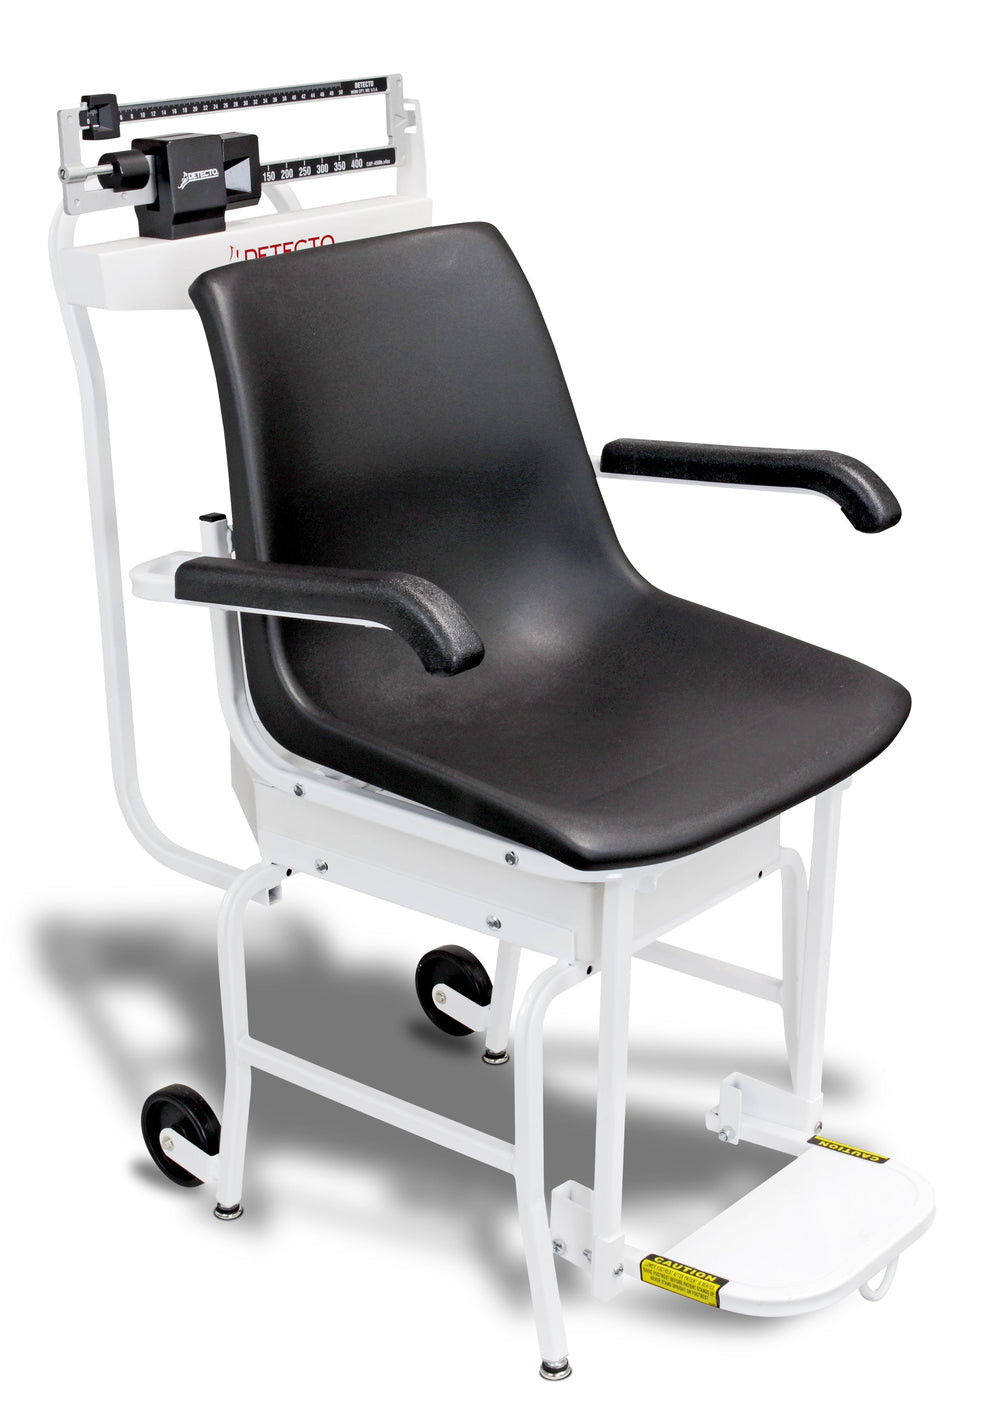 Detecto Digital Chair Scales